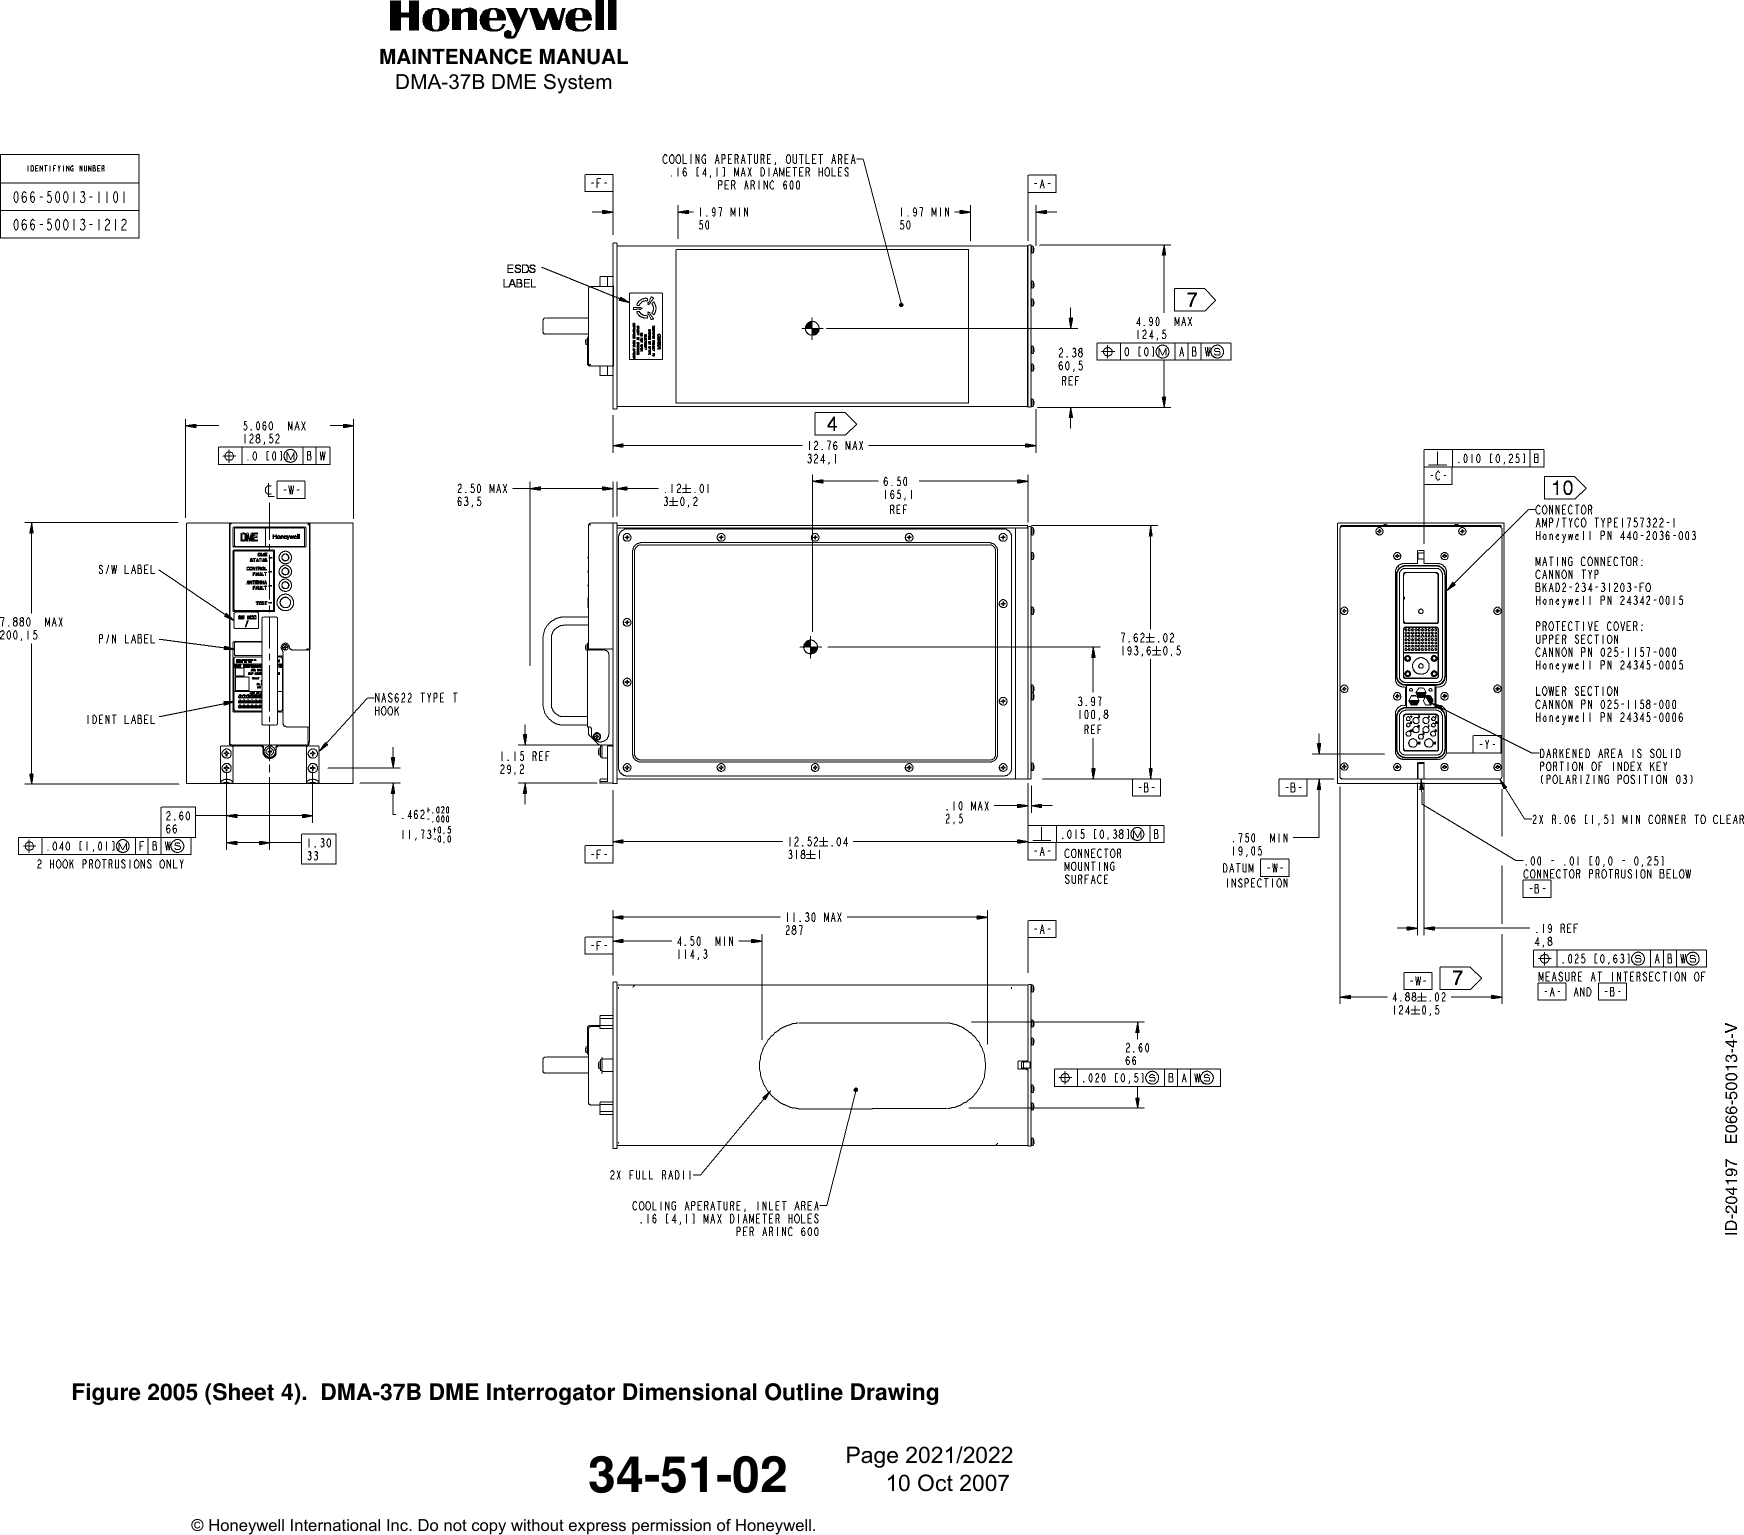 10 Oct 200734-51-02MAINTENANCE MANUALDMA-37B DME System© Honeywell International Inc. Do not copy without express permission of Honeywell.Figure 2005 (Sheet 4).  DMA-37B DME Interrogator Dimensional Outline DrawingPage 2021/2022